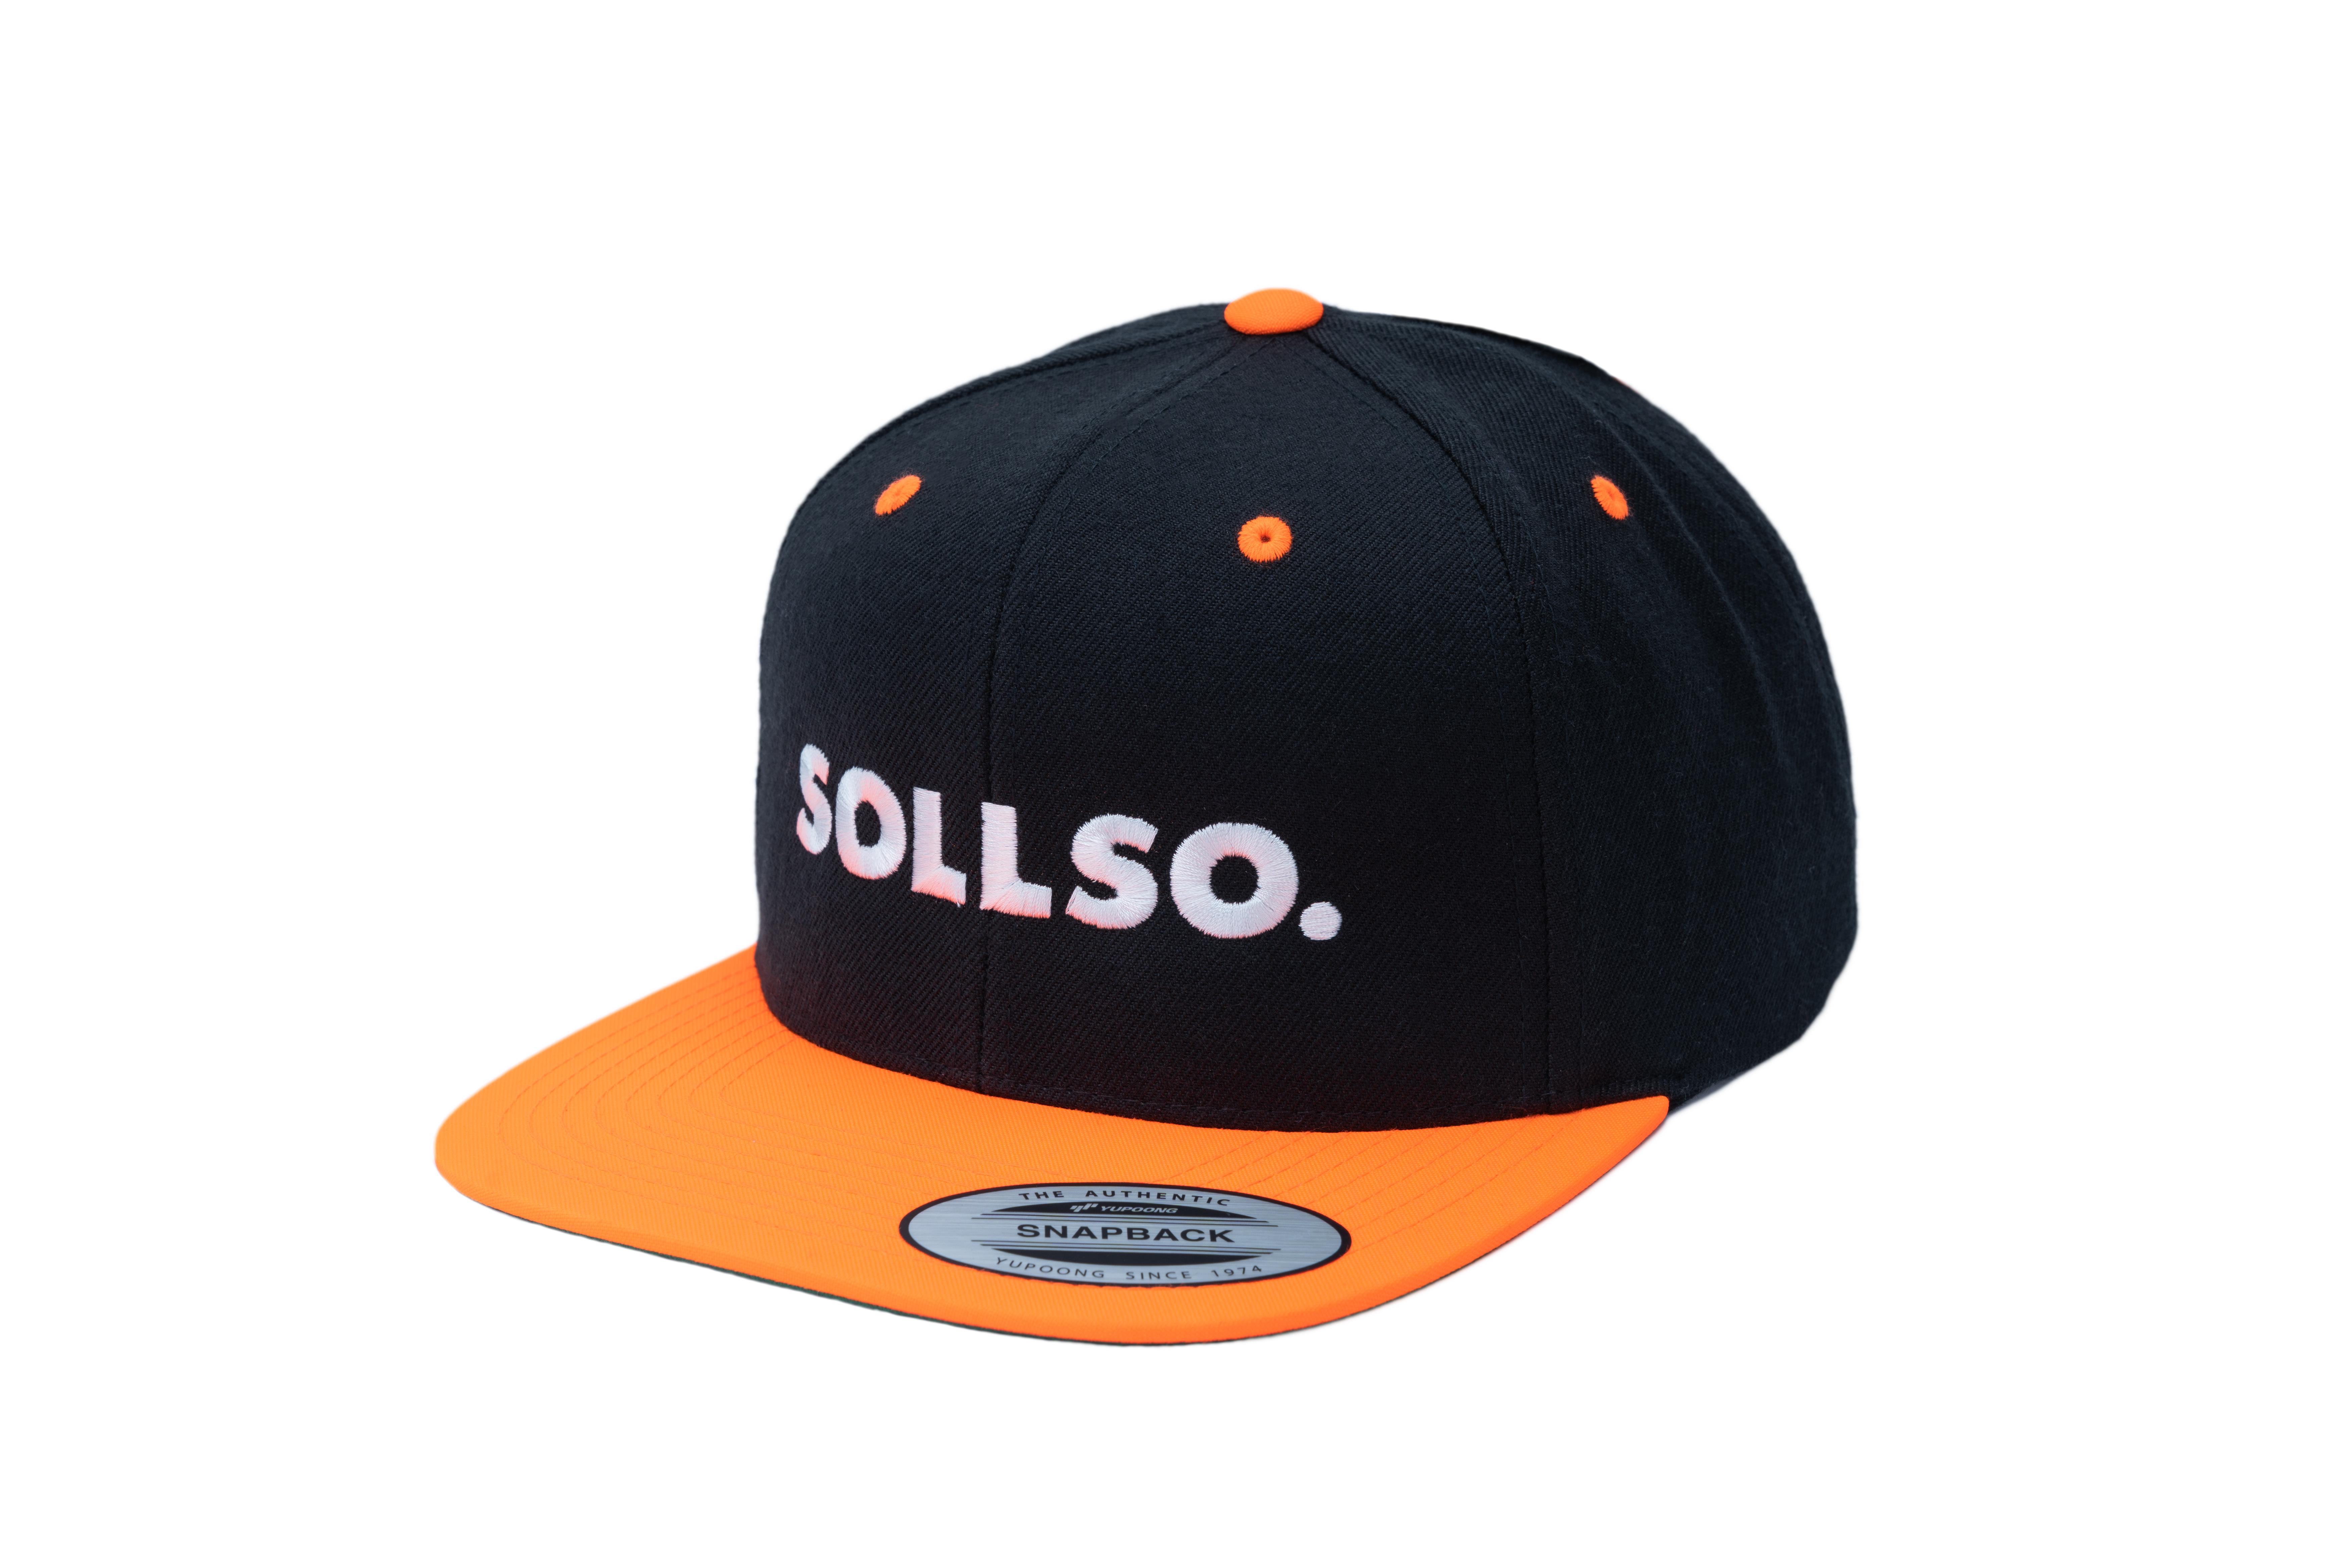 SOLLSO. Classic Snapback 2-Tone Cap, Black-Neon Orange